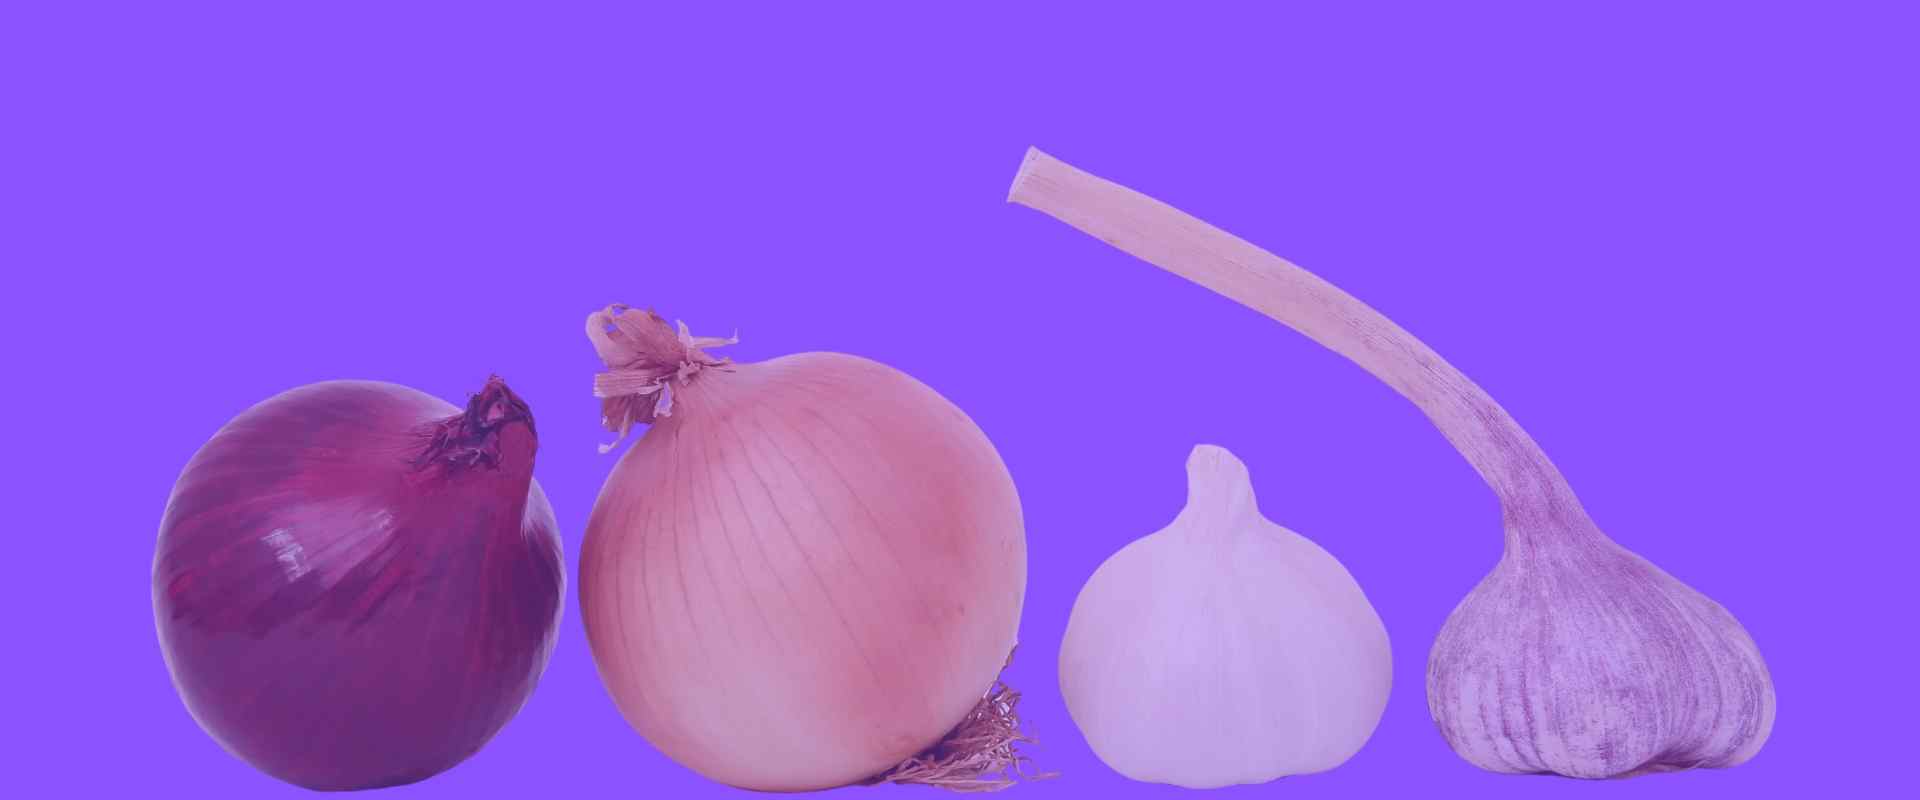 Unpeeling the onion